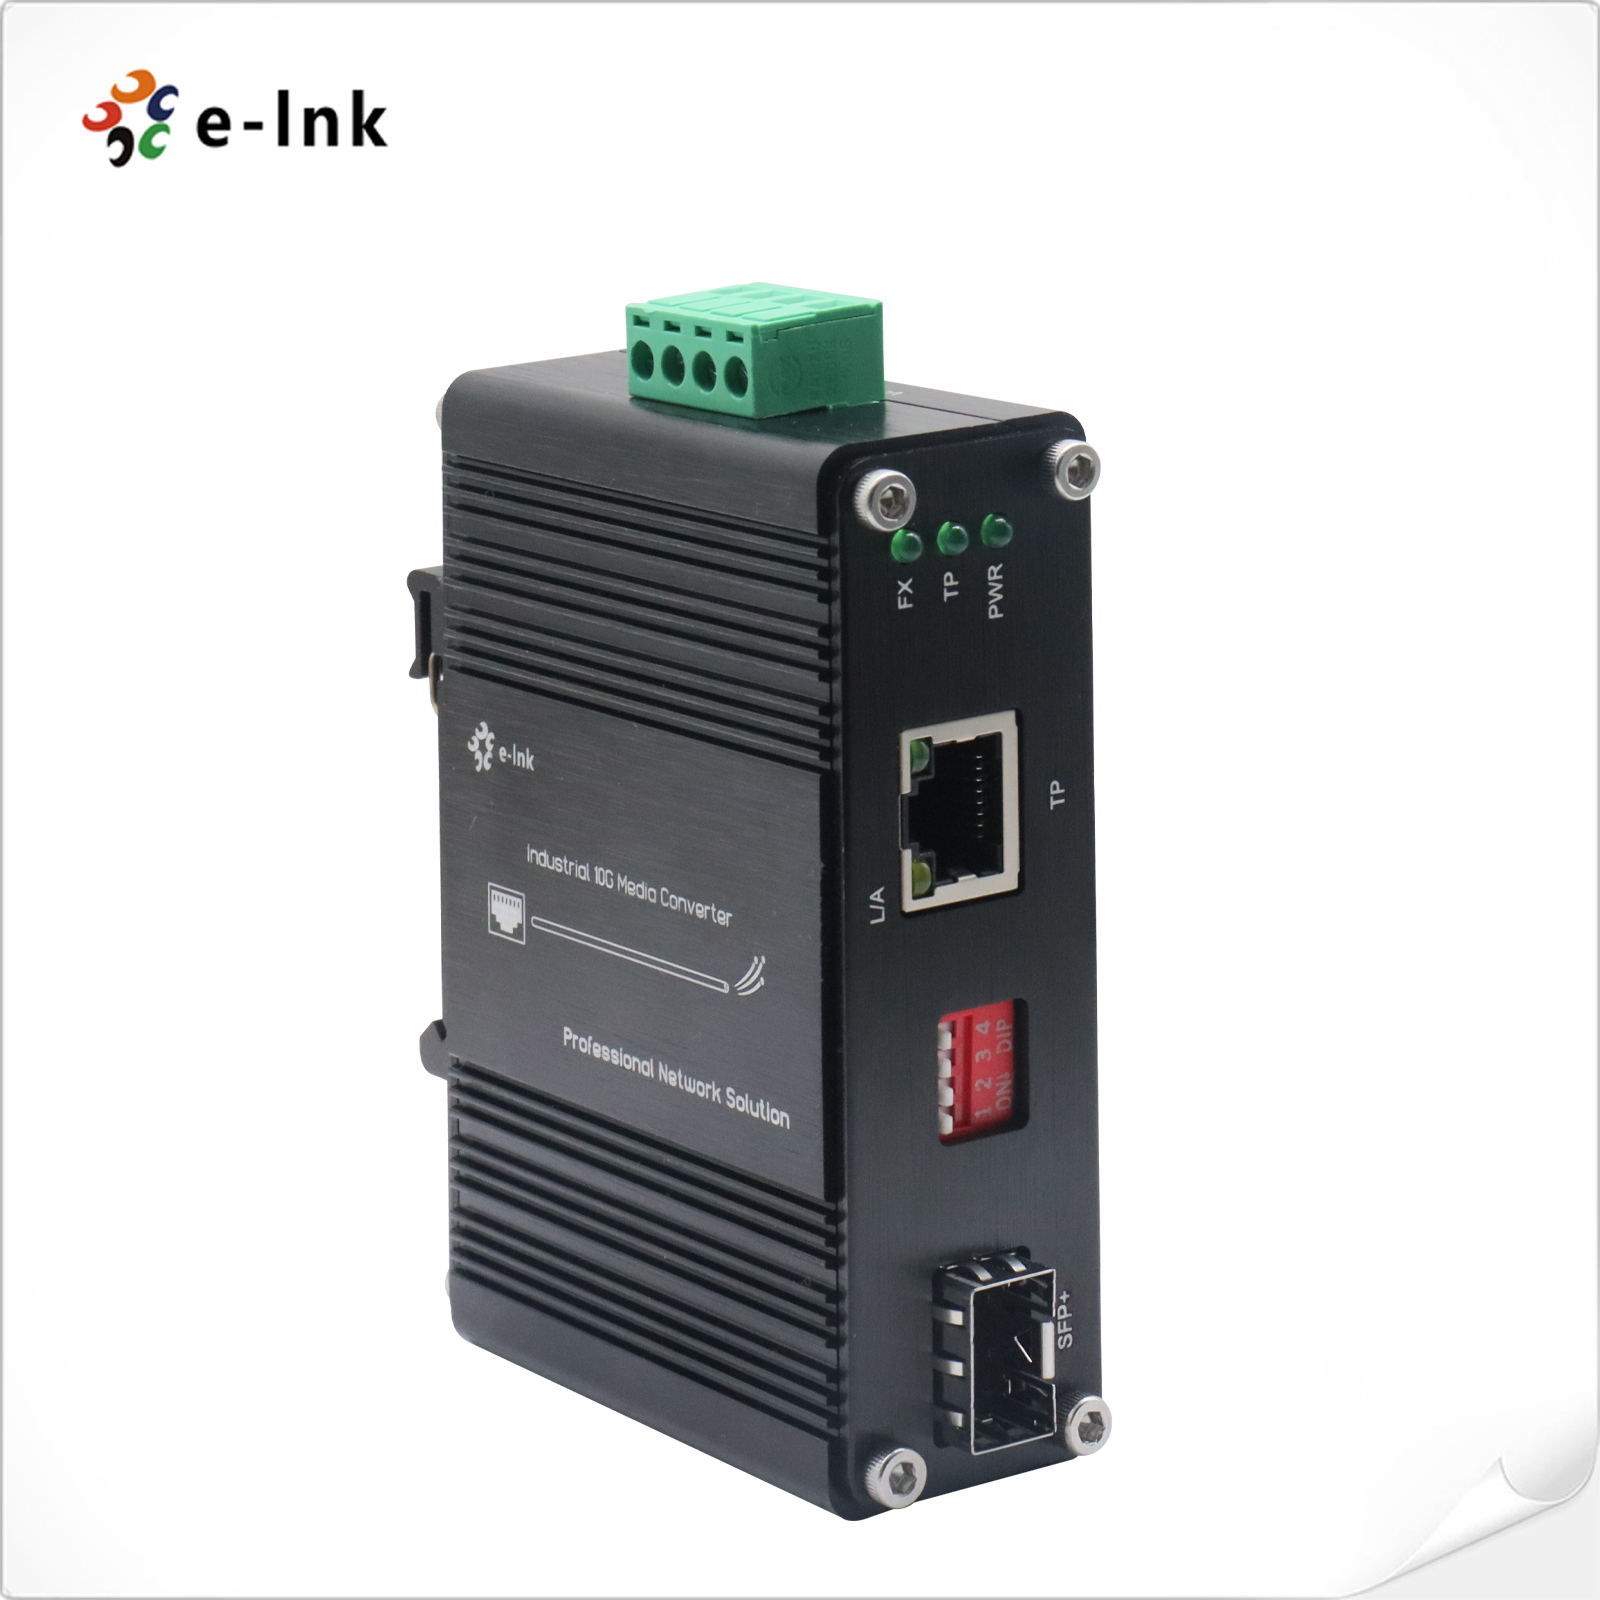 Mini Industrial 10G/5G/2.5G/1G/100M Copper to 10GBASE-X SFP+ Media Converter